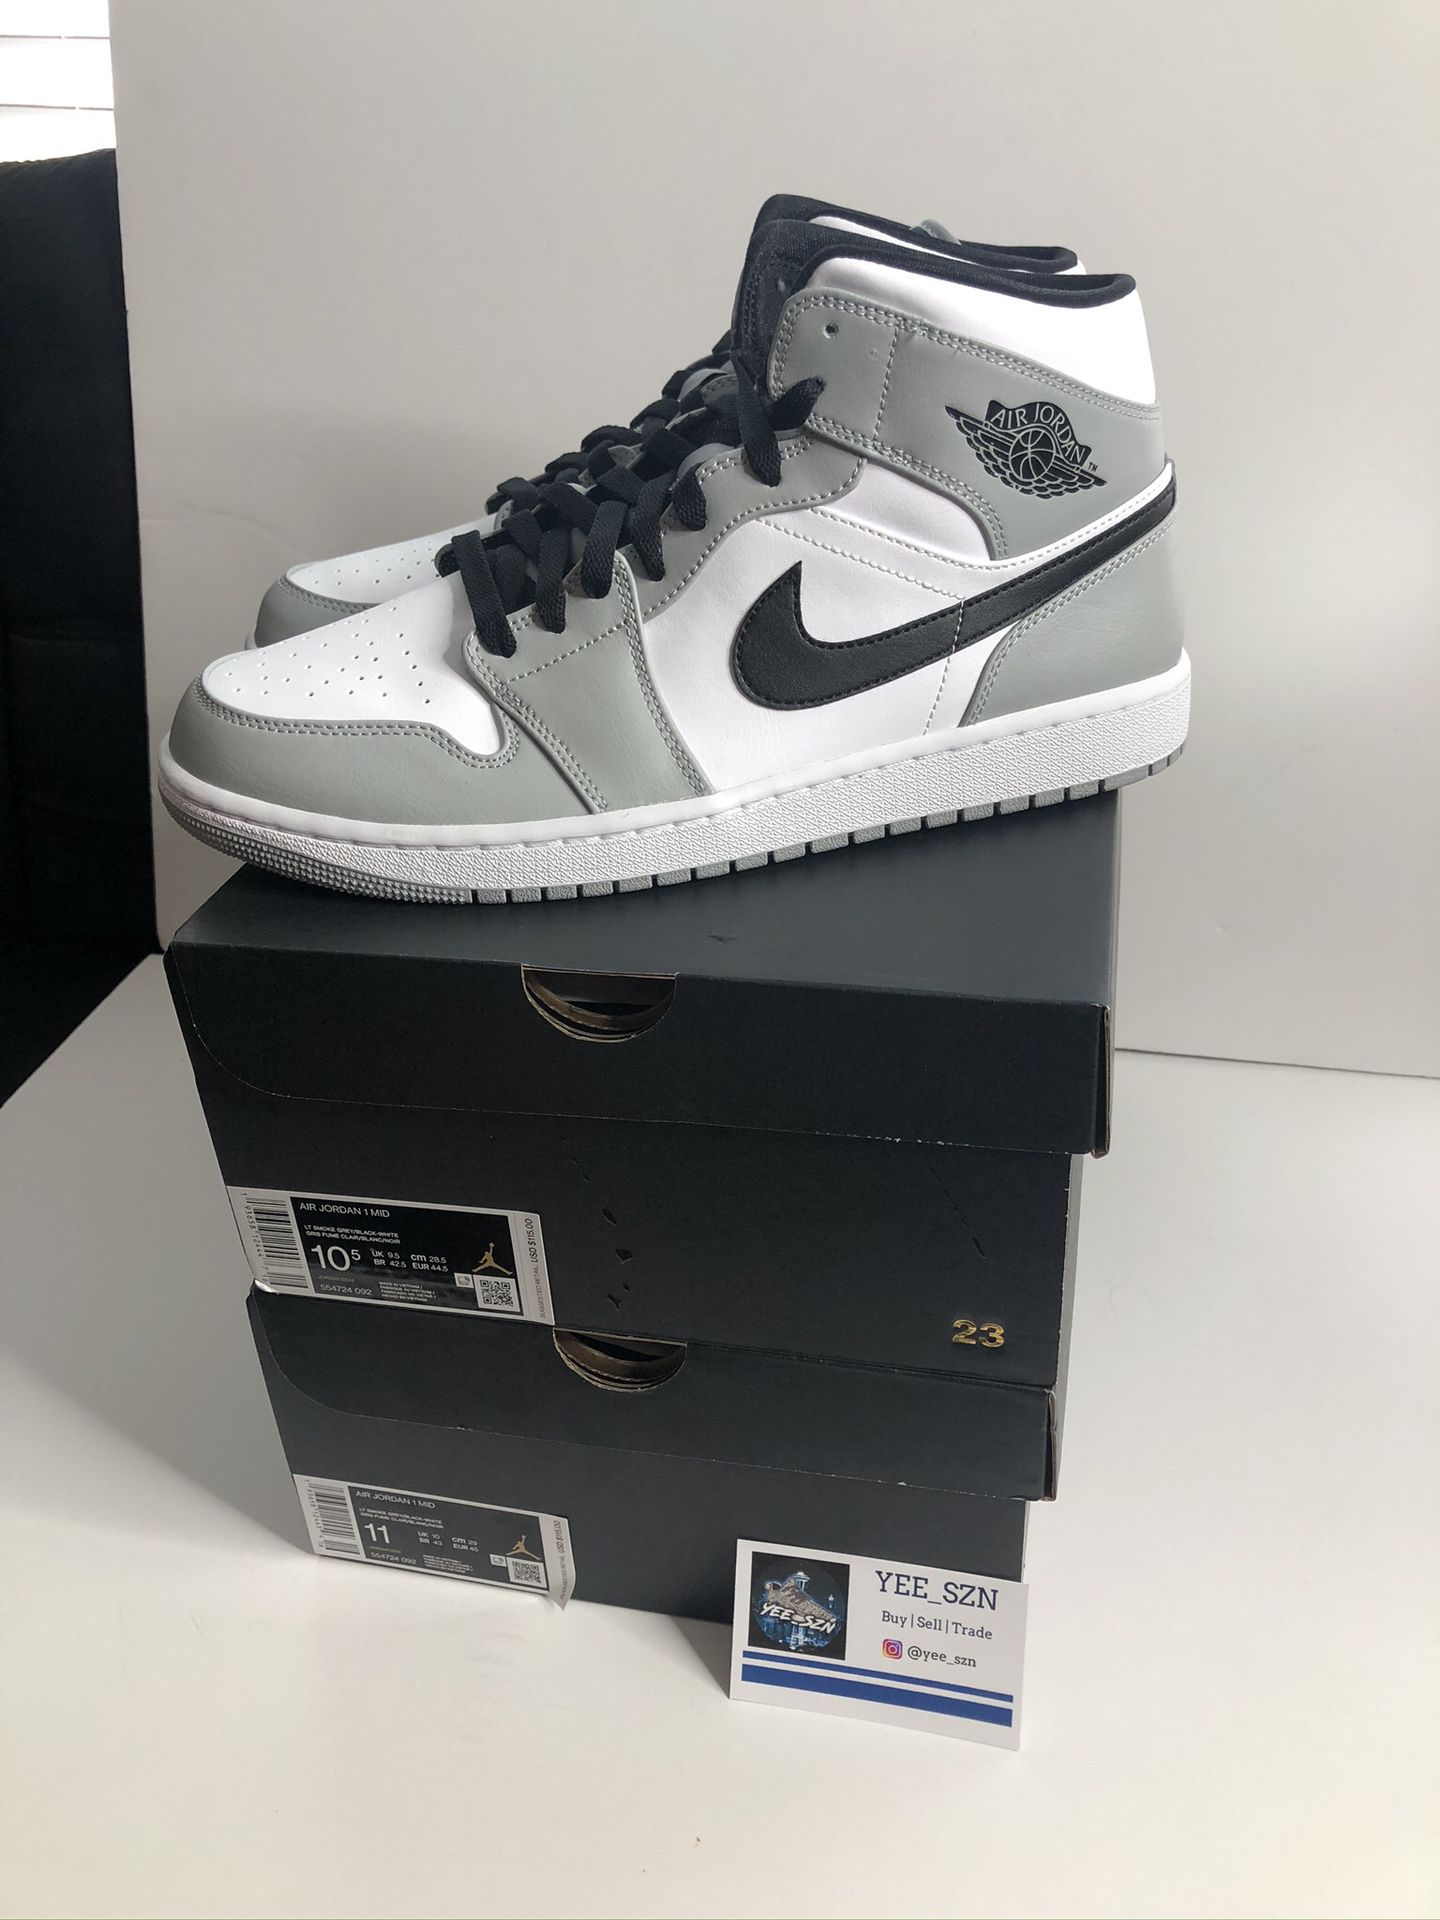 Nike air Jordan 1 smoke grey size 10.5 and 11